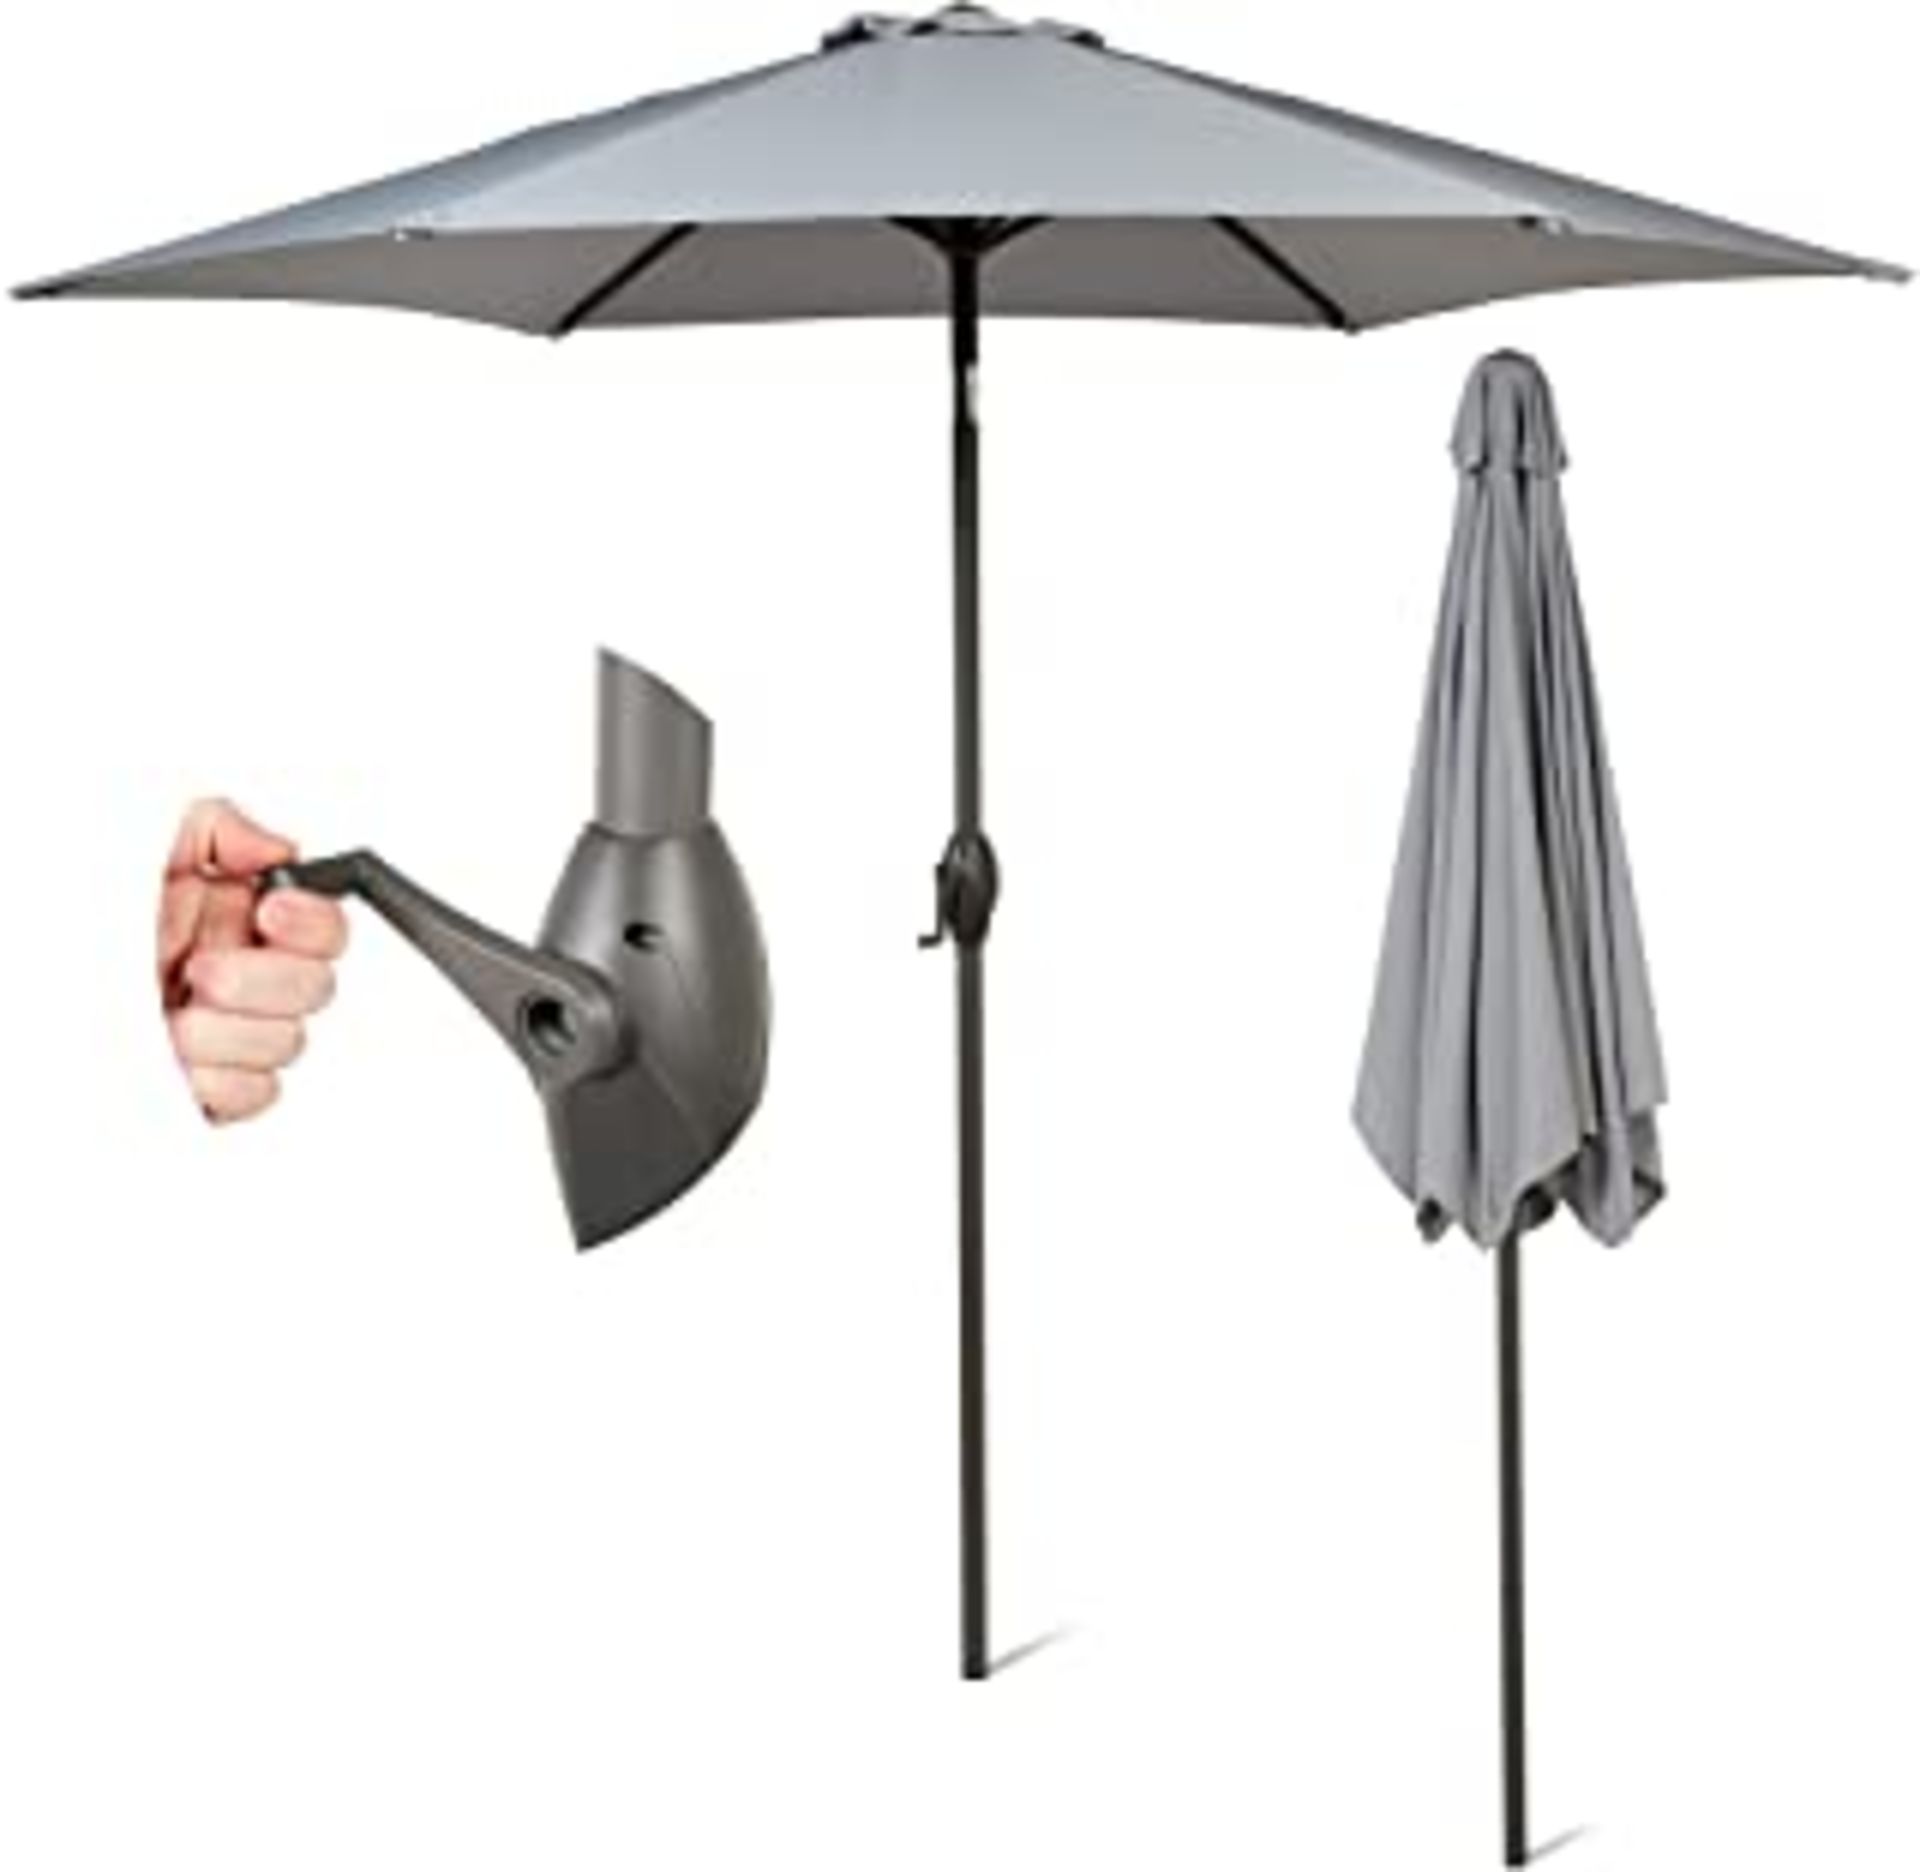 * 5x Grey Middle Pole Umbrella with Parasol Base. Parasol 2.7m Diameter. Steel Frame. 180g